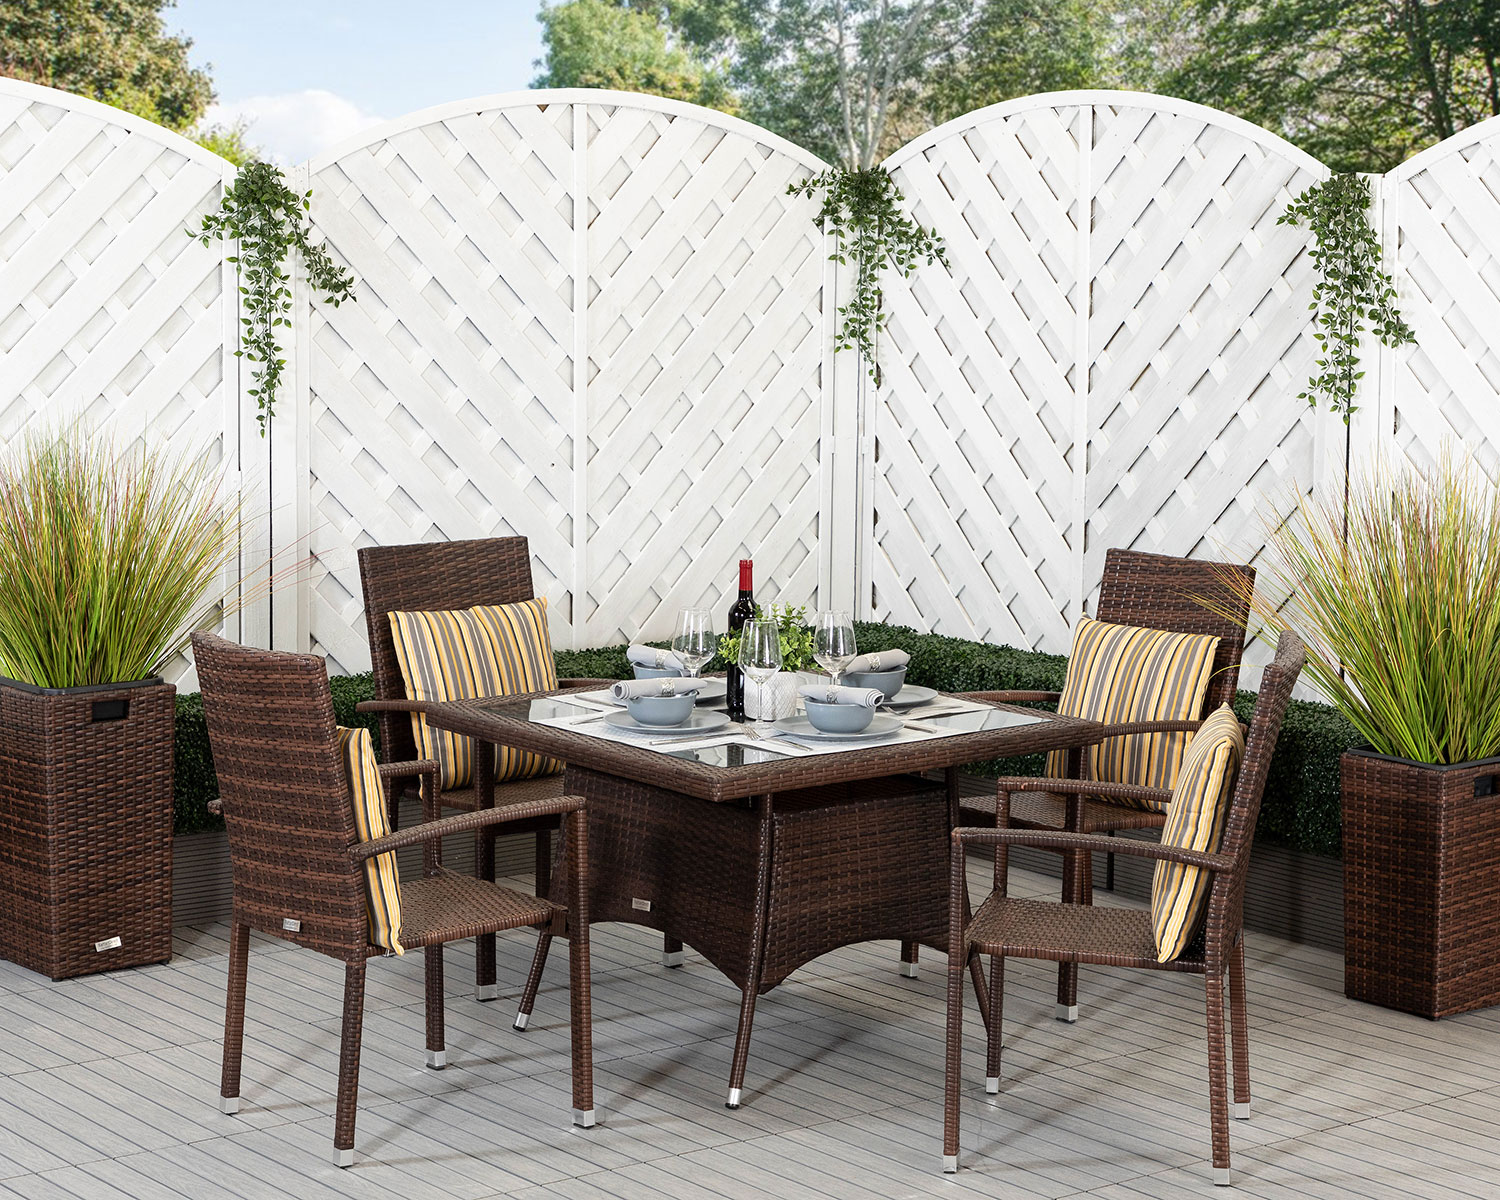 Set rio 031 - rattan garden furniture | patio furniture |conservatory furniture